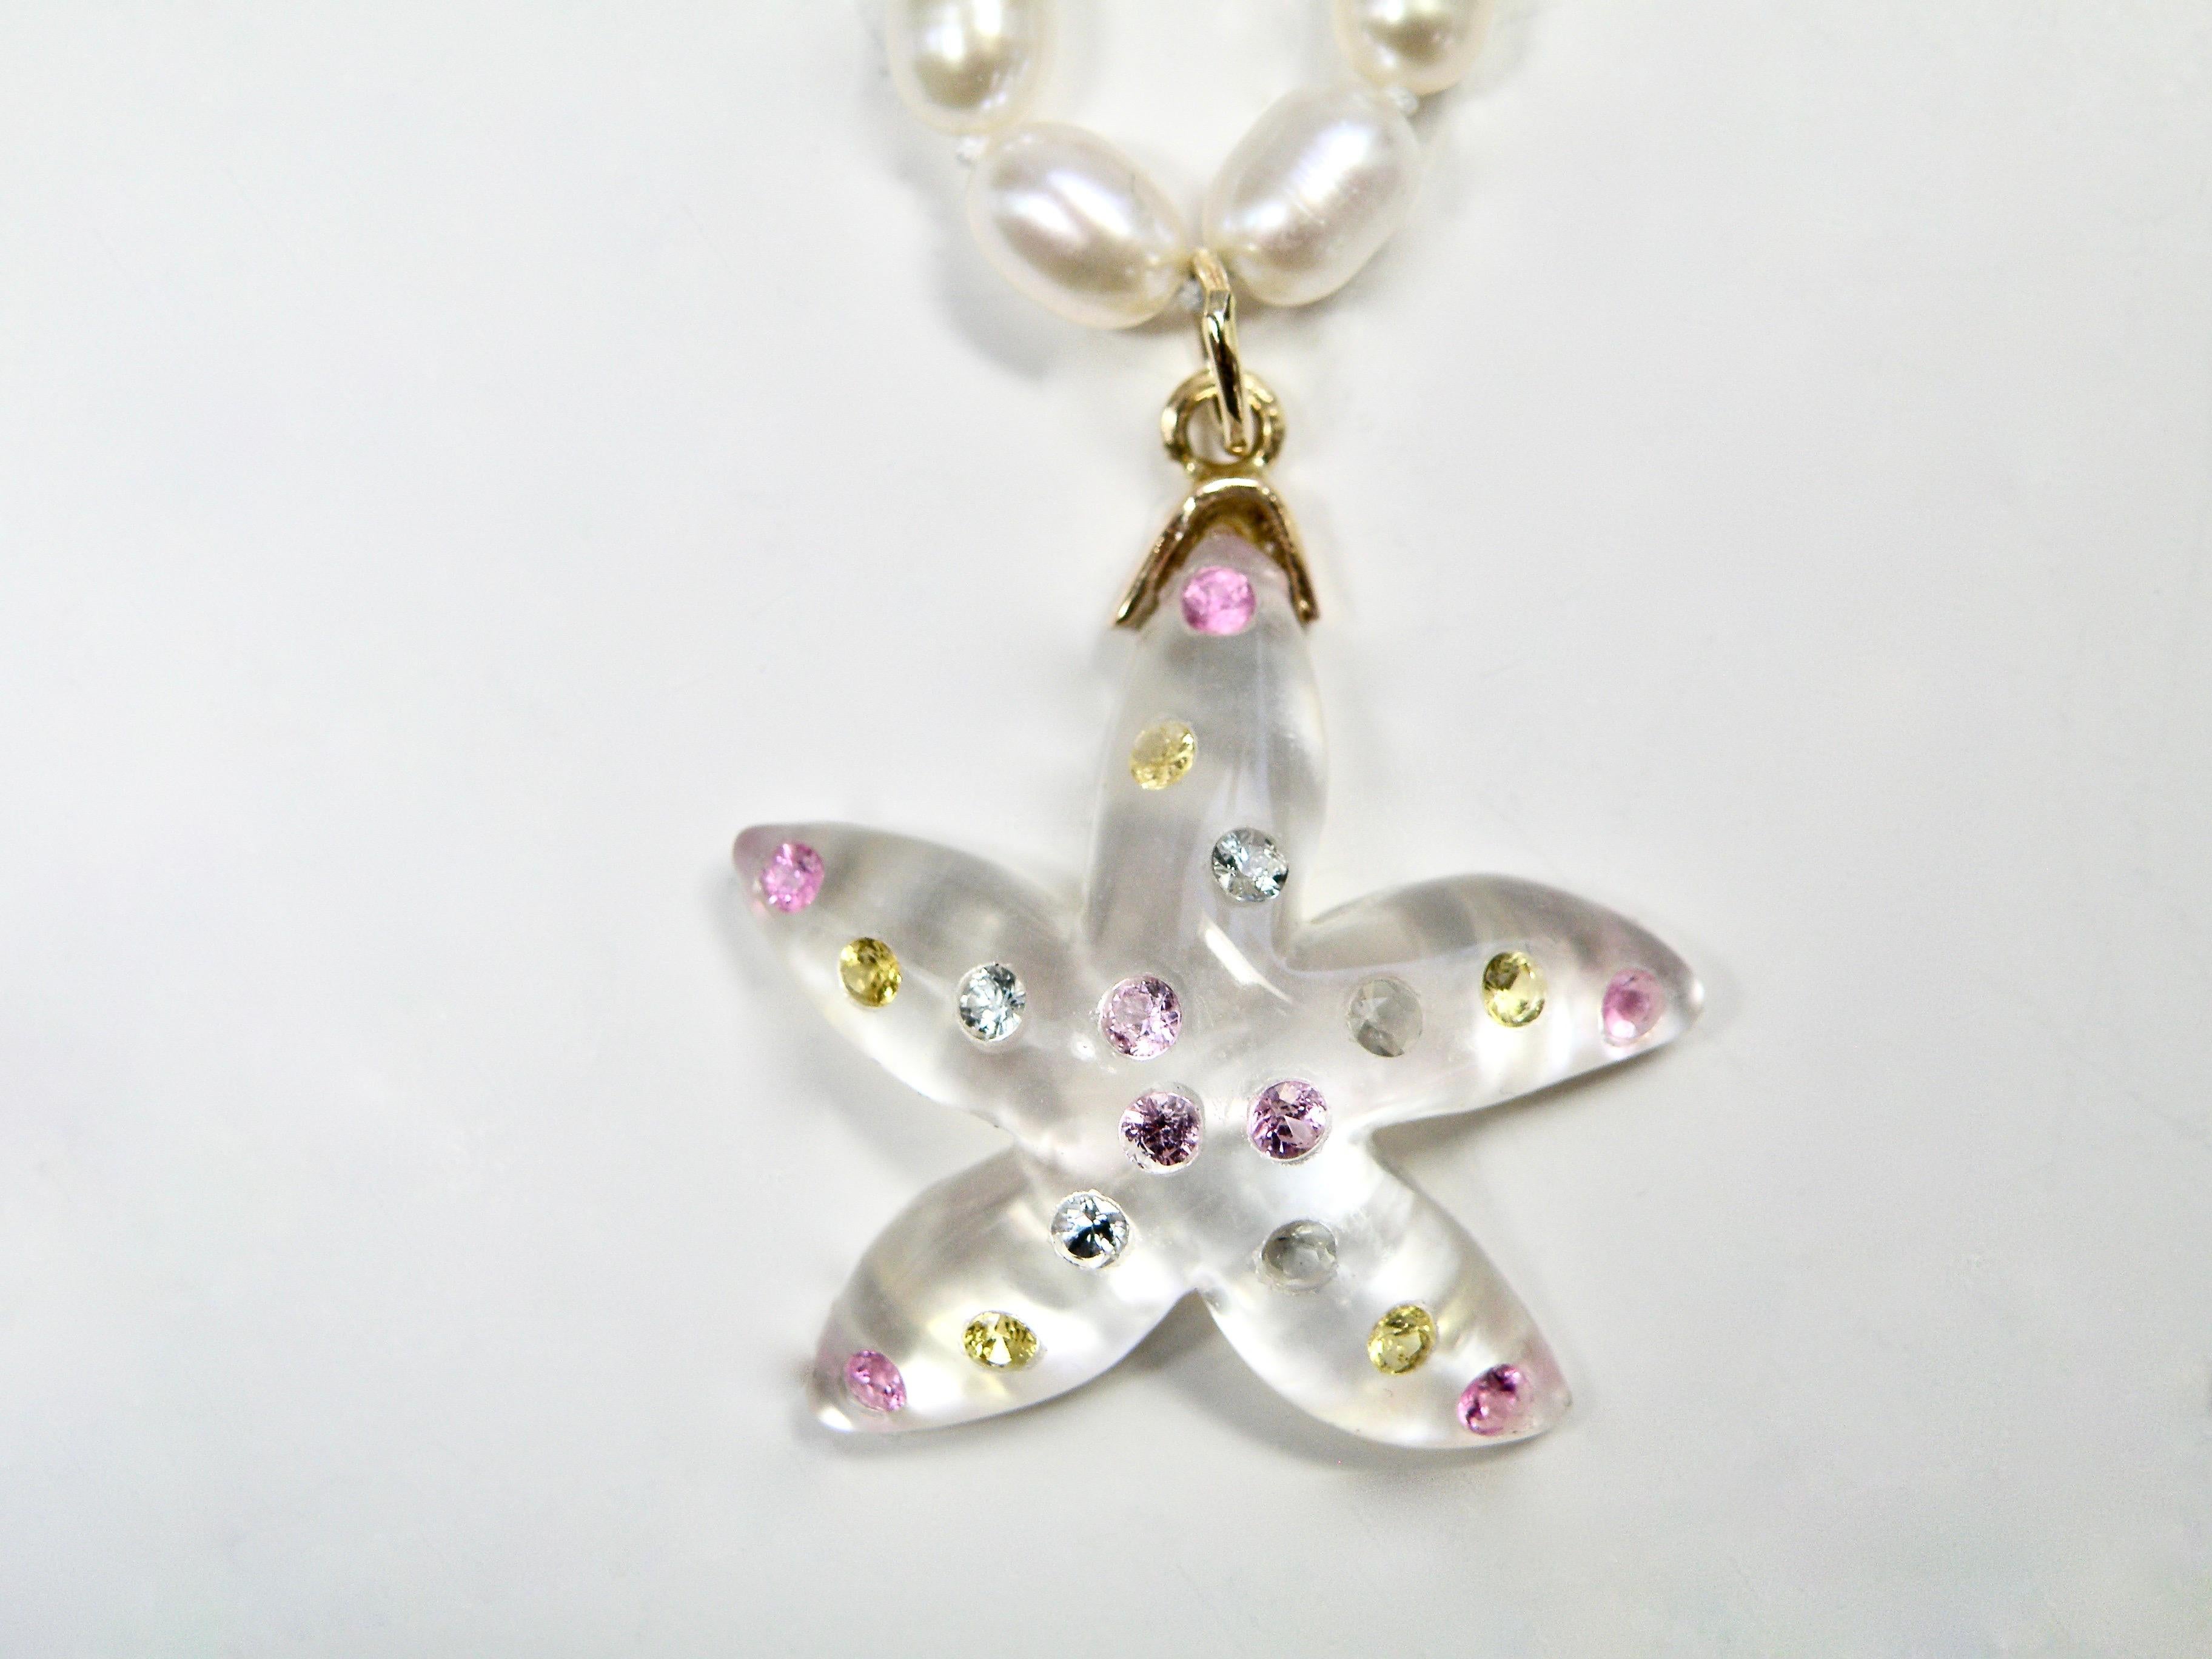 18 karat & 24mm mother of pearl starfish pendant inlaid with 2mm aquamarine & pink tourmaline gemstones 